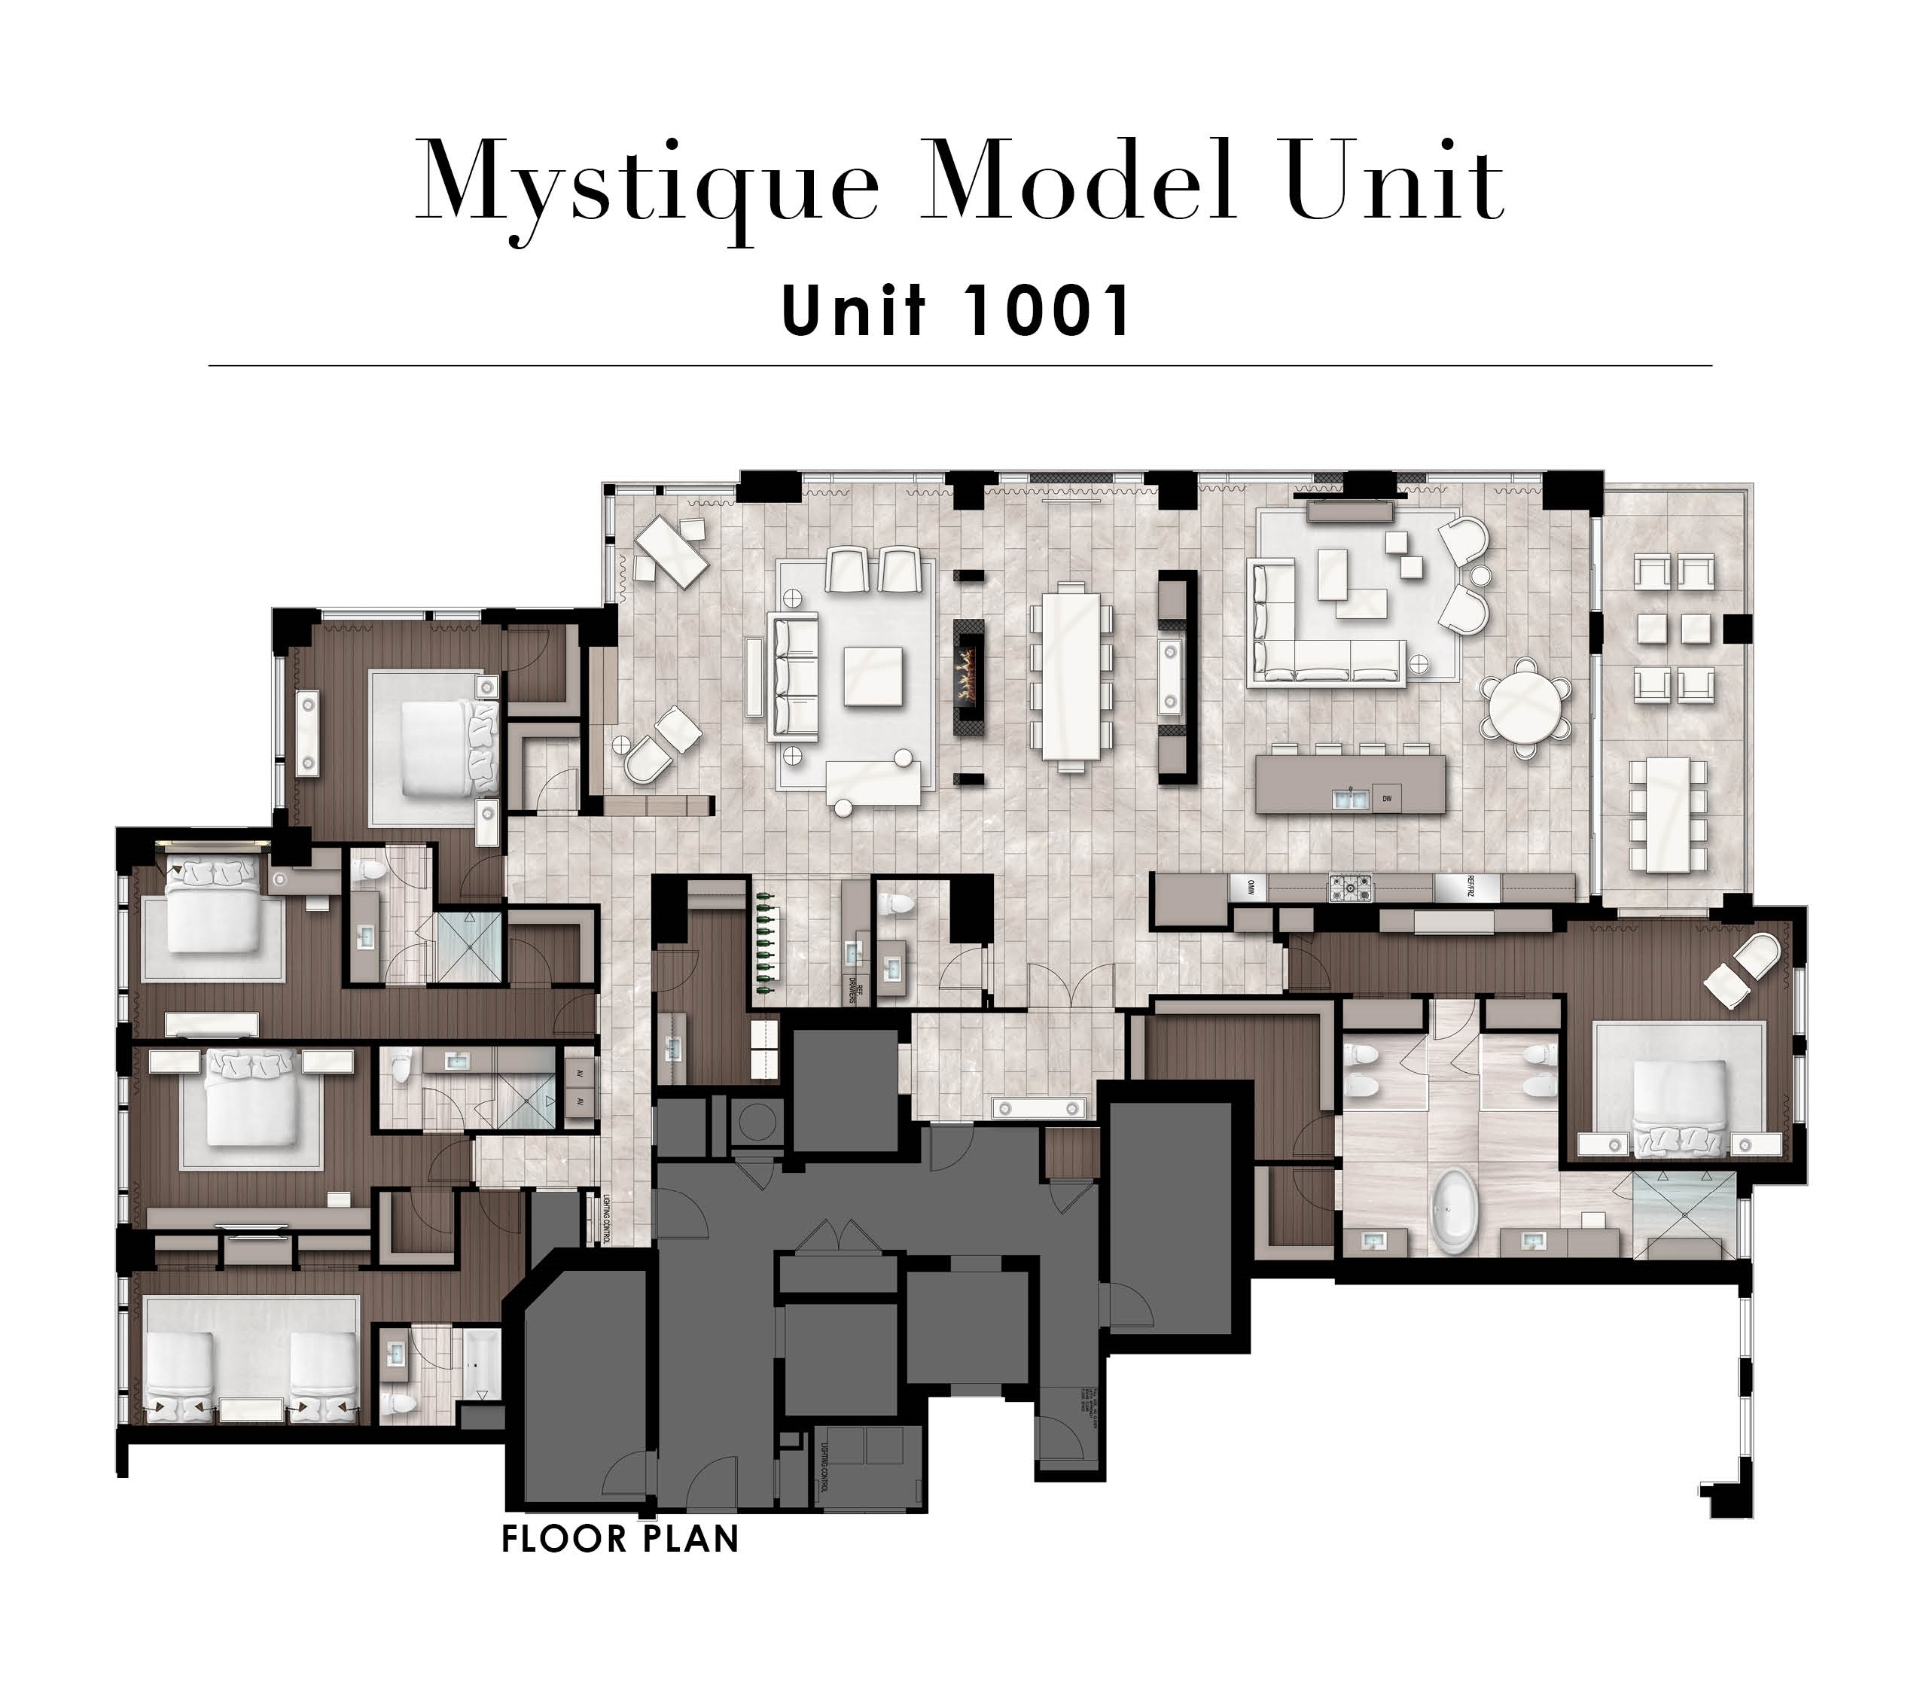 Mystique model unit